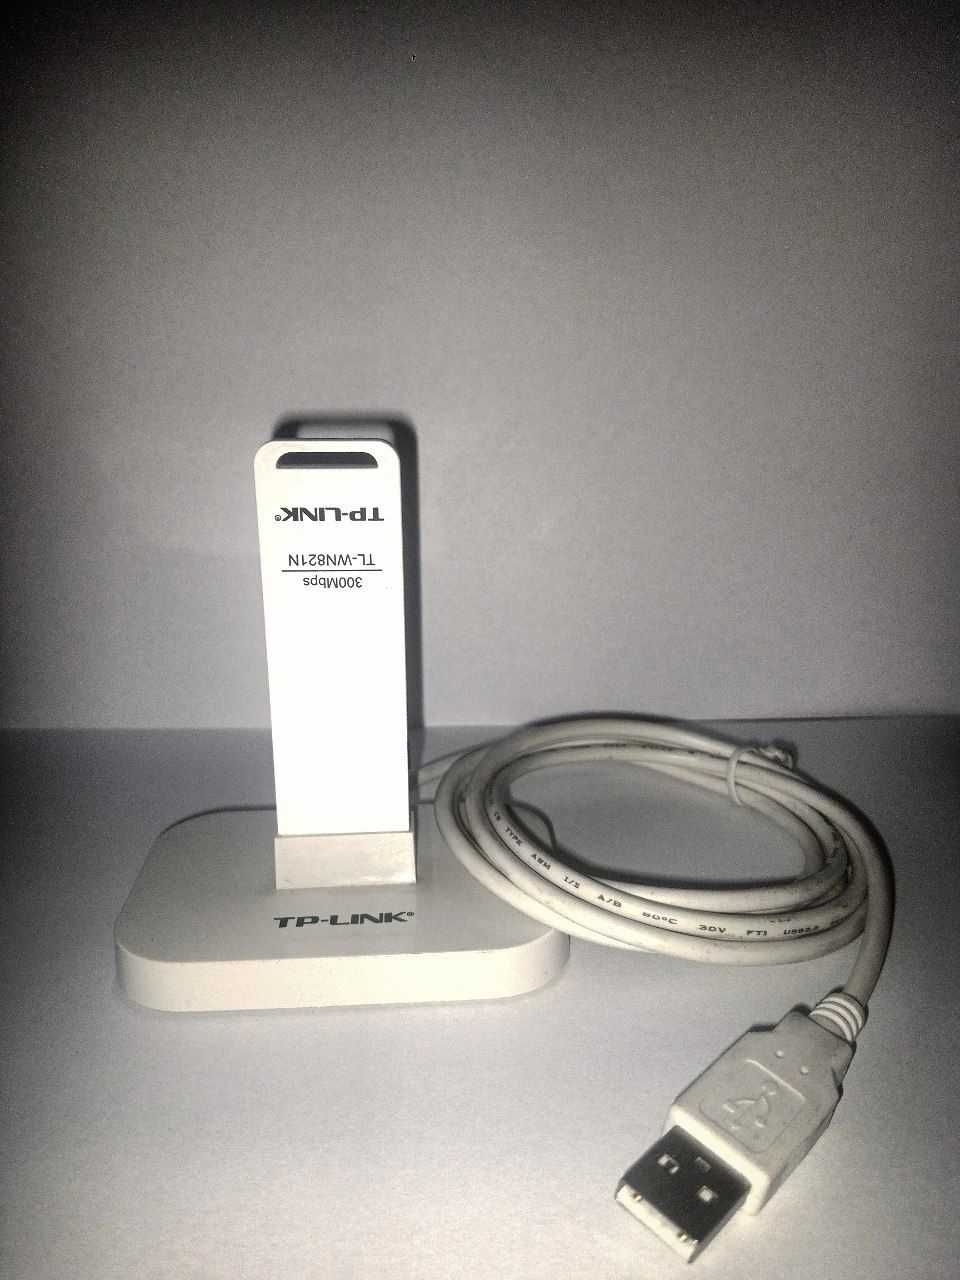 USB-адаптер сети WiFi TP-LINK TL-WN821N 300Mbps